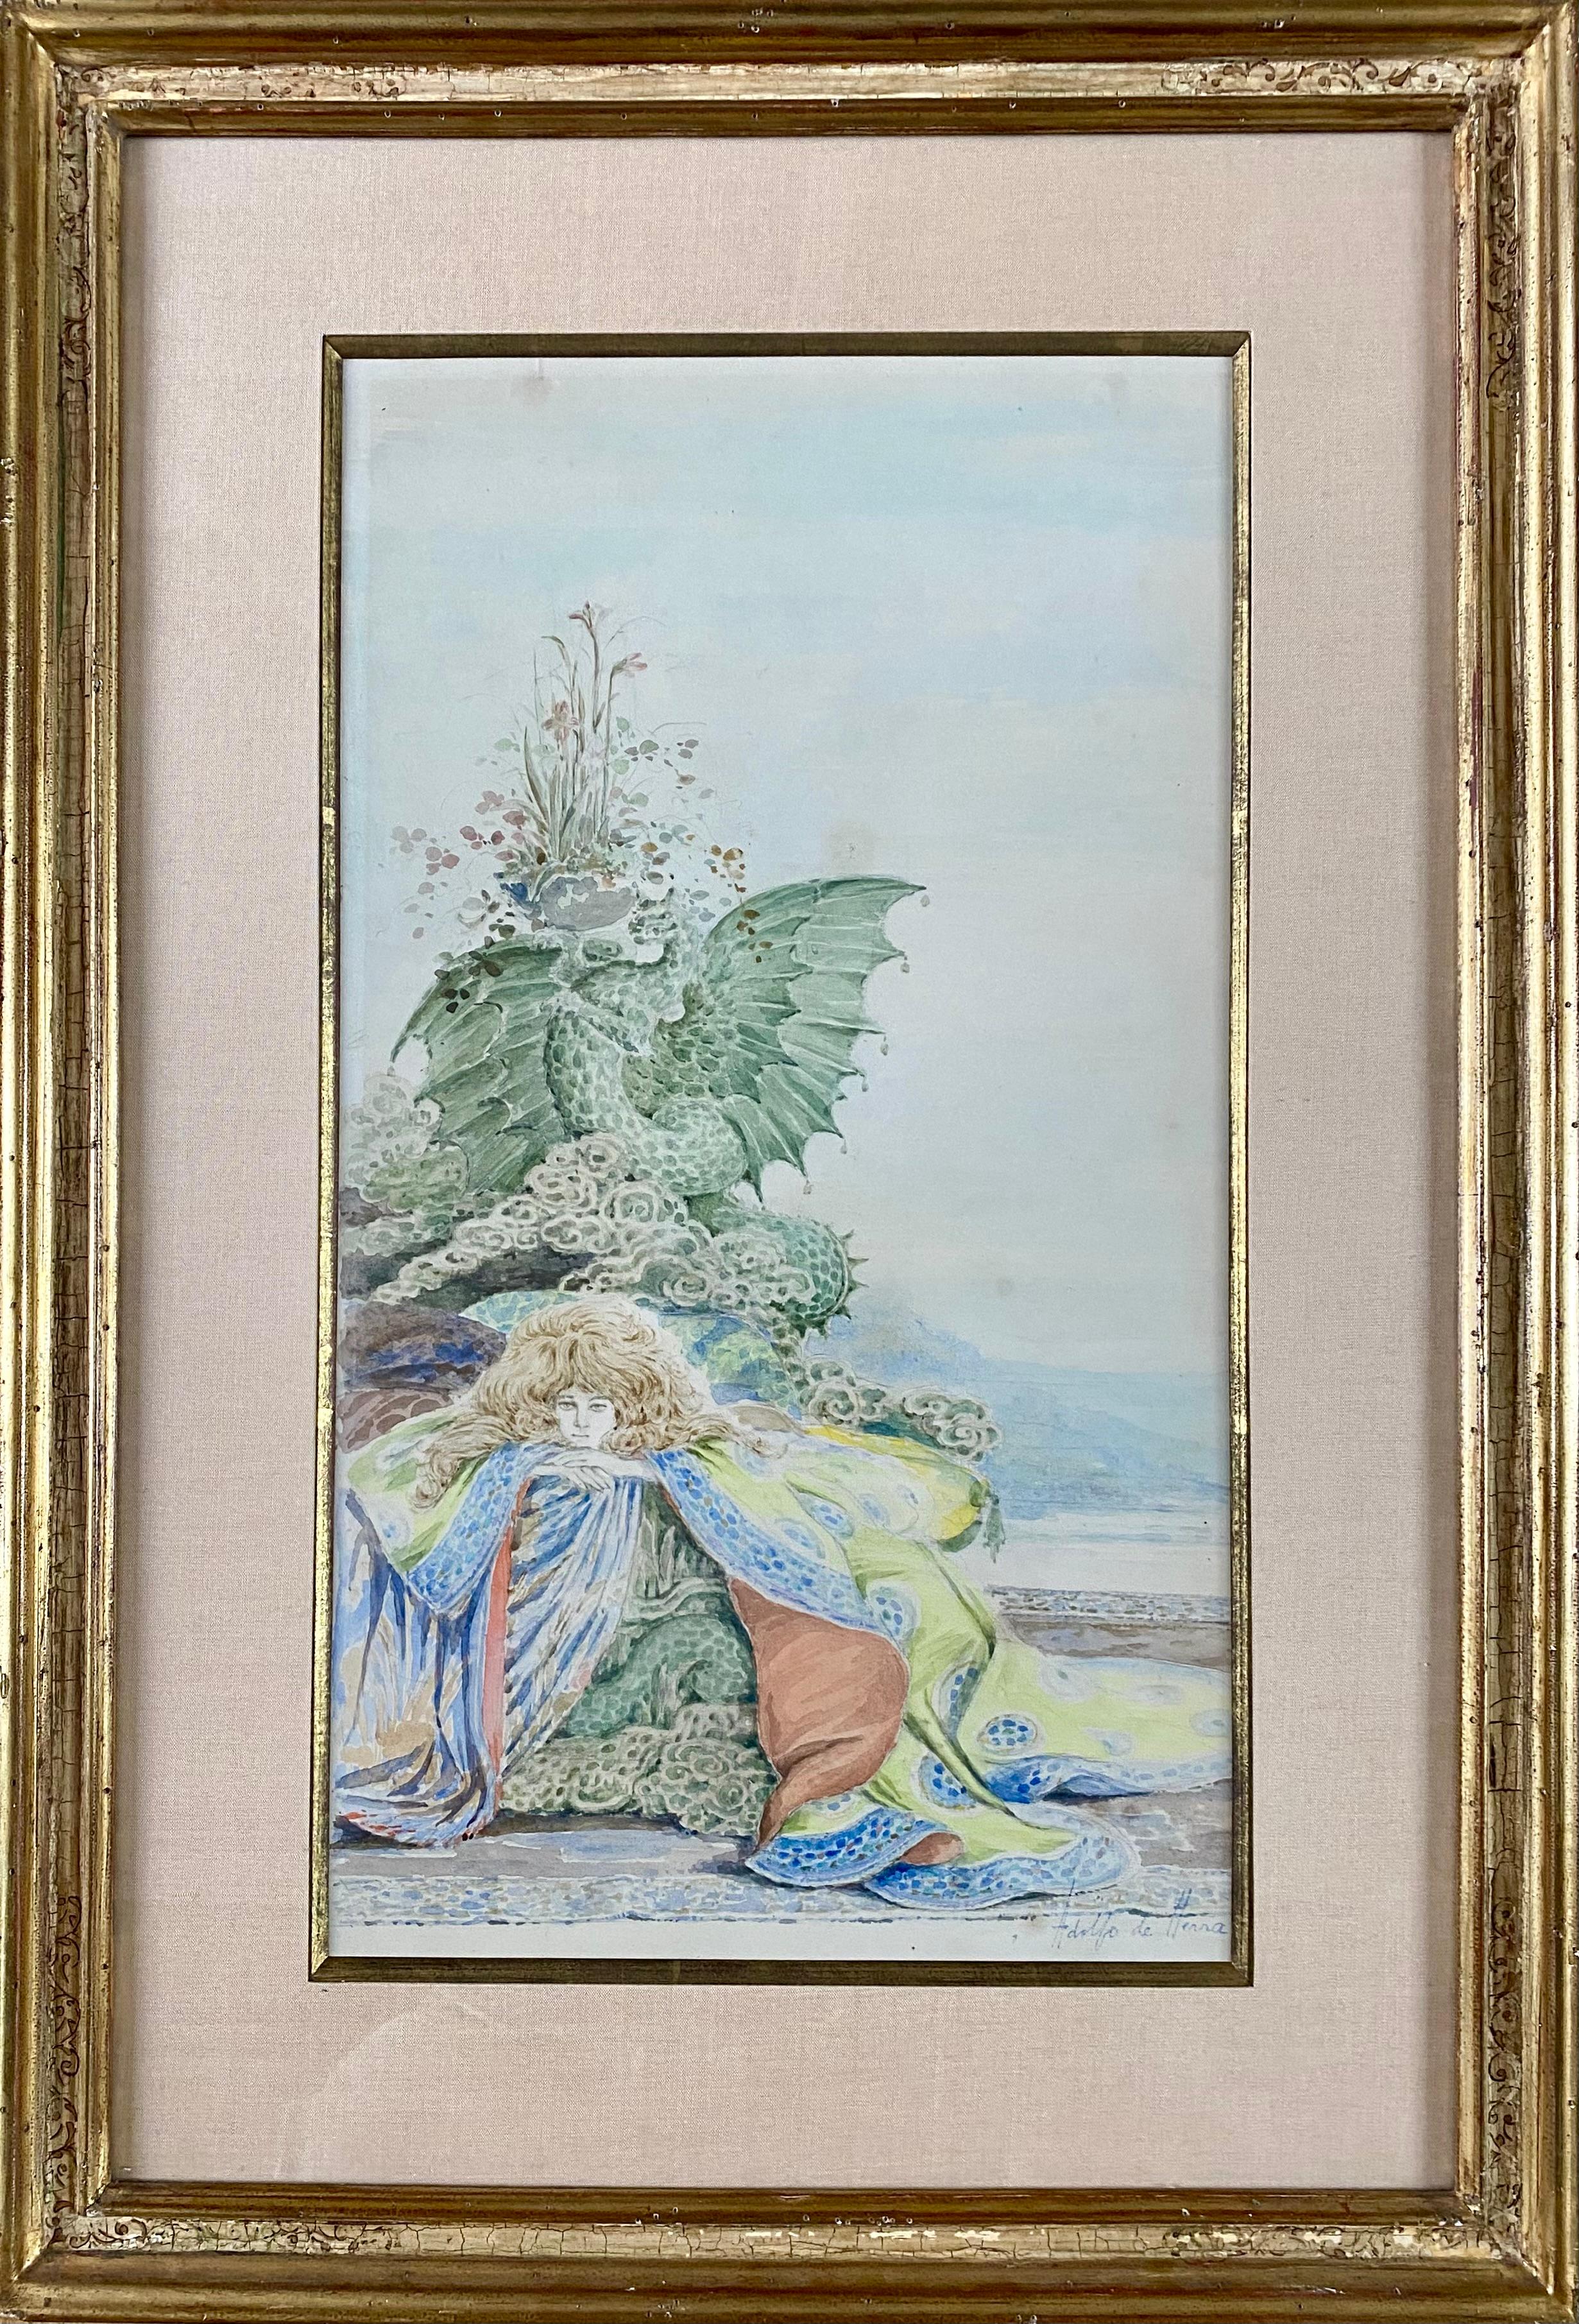 Adolfo de Herra Figurative Art - Adolfo De Herra, Woman With Dragon Around 1900, Watercolor Symbolism